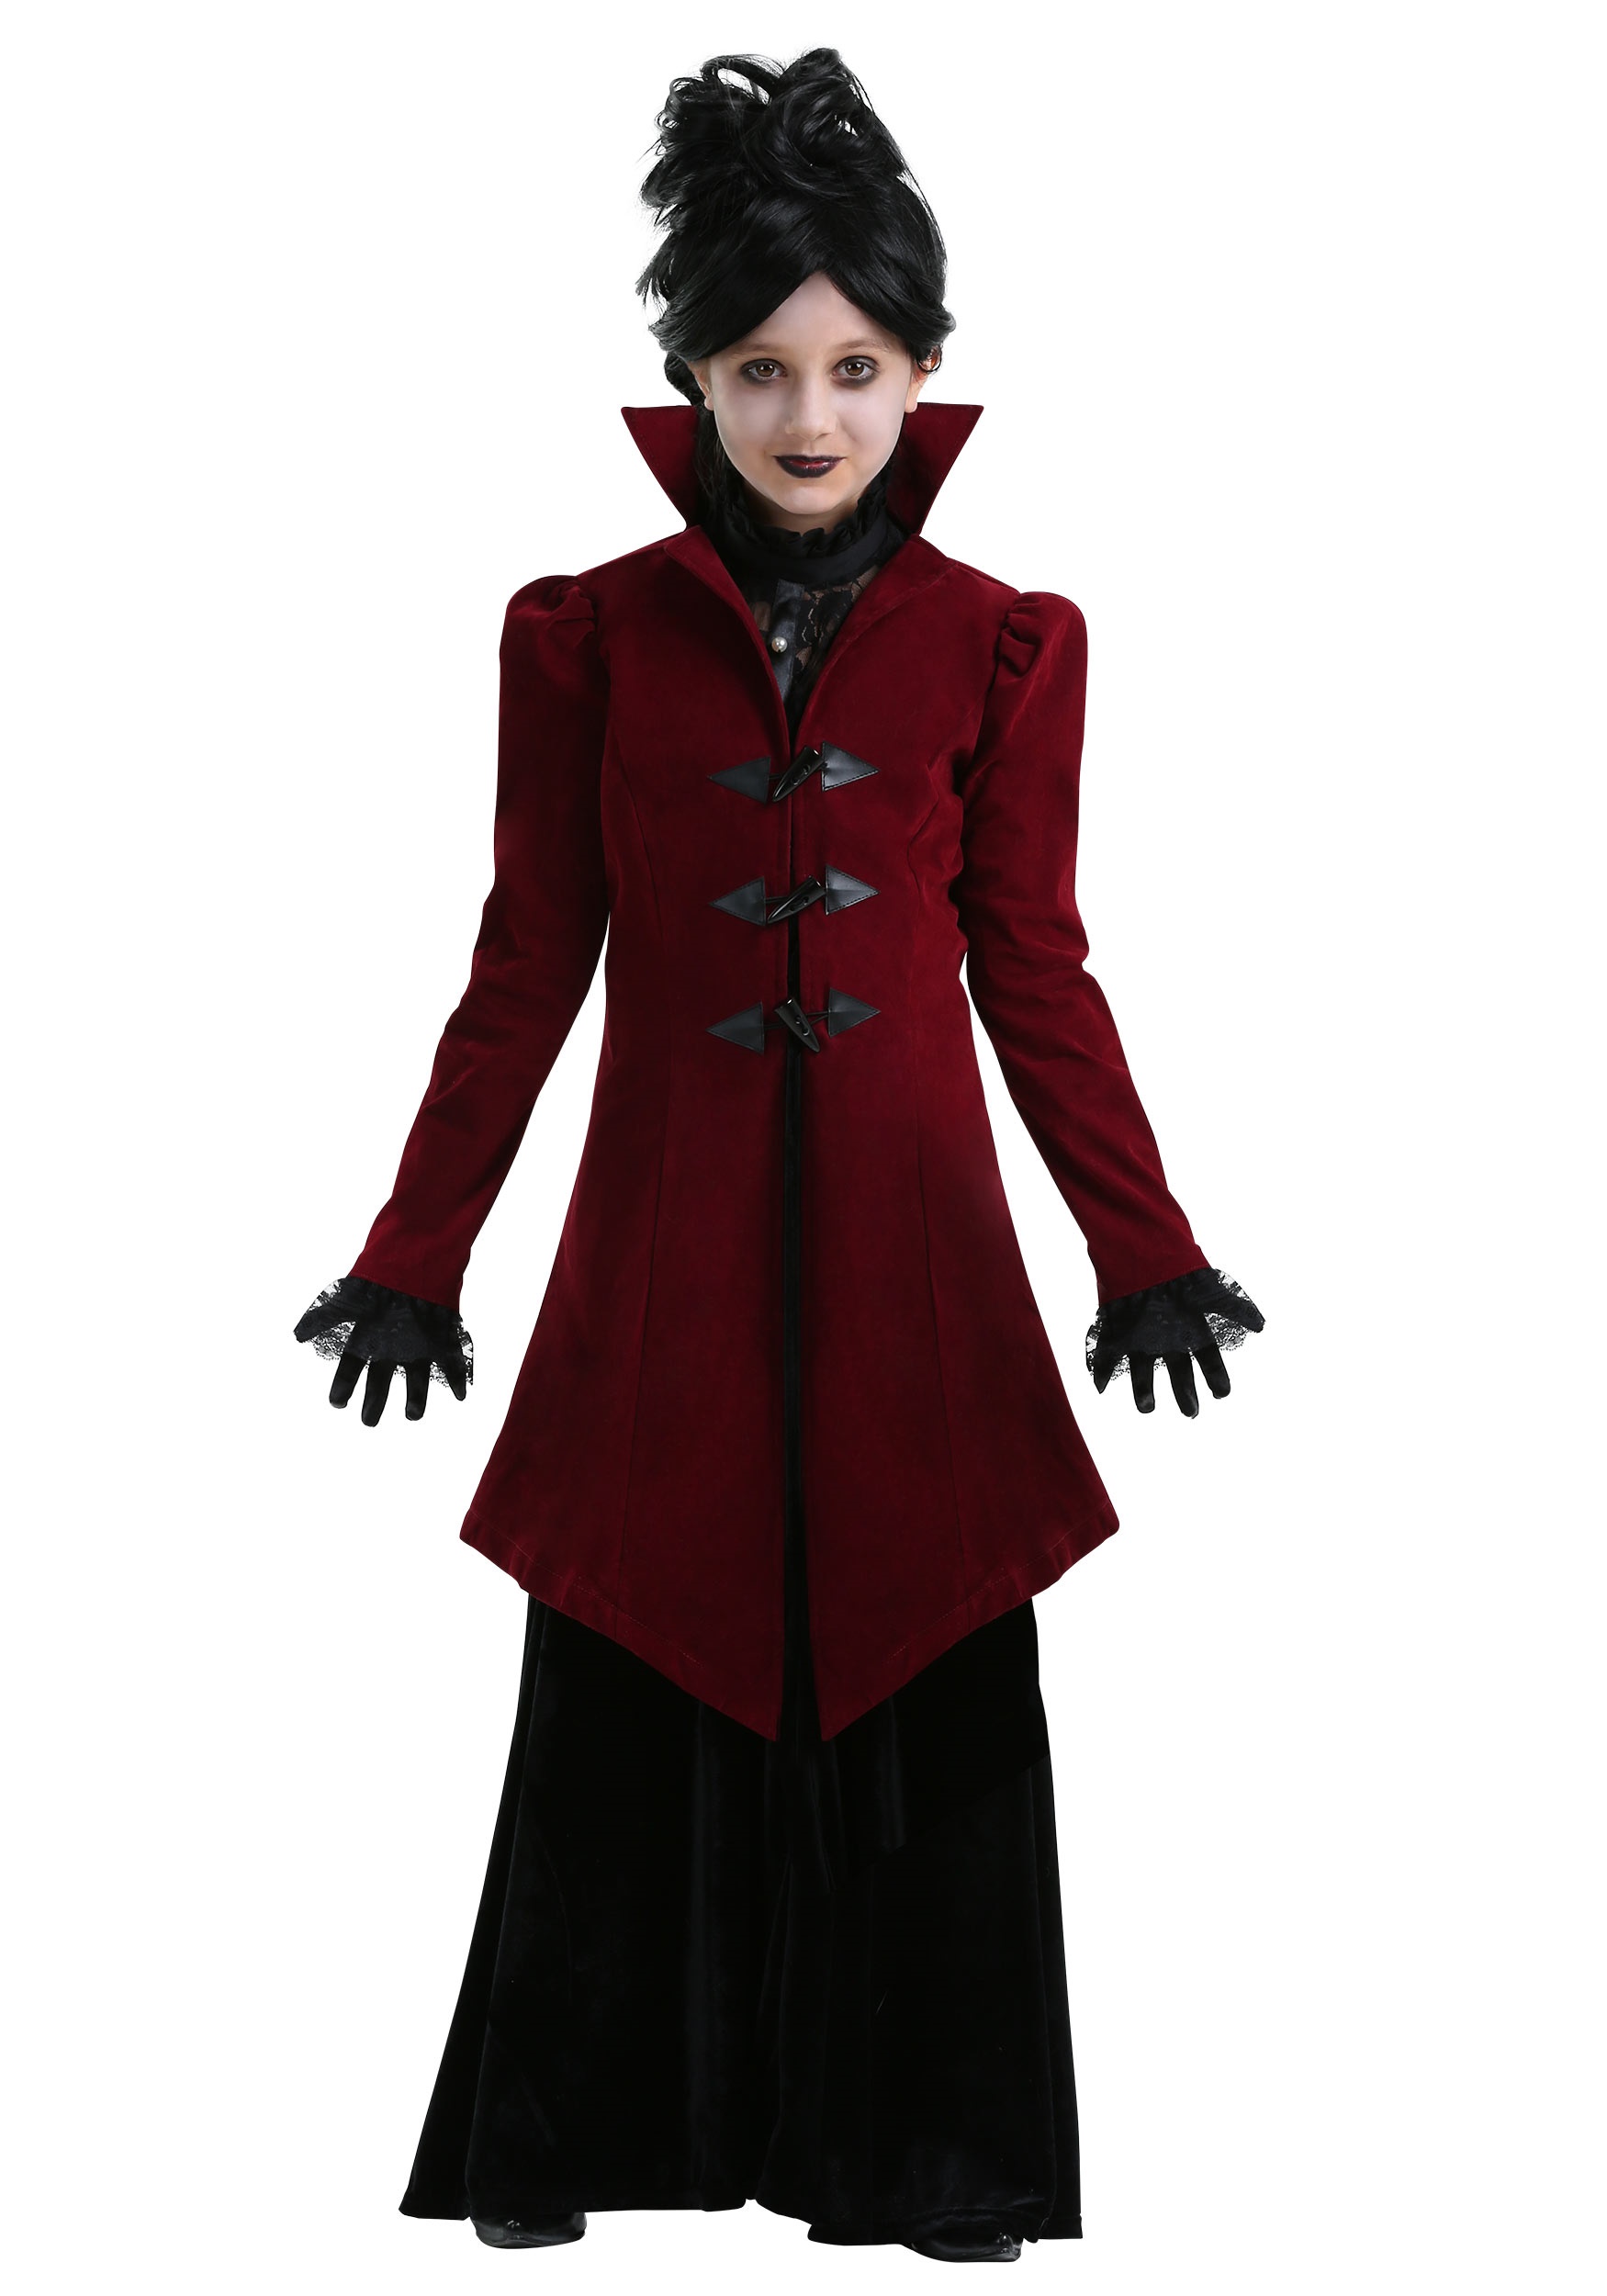 Photos - Fancy Dress FUN Costumes Delightfully Dreadful Girl's Vampiress Black/Red FUN1616C